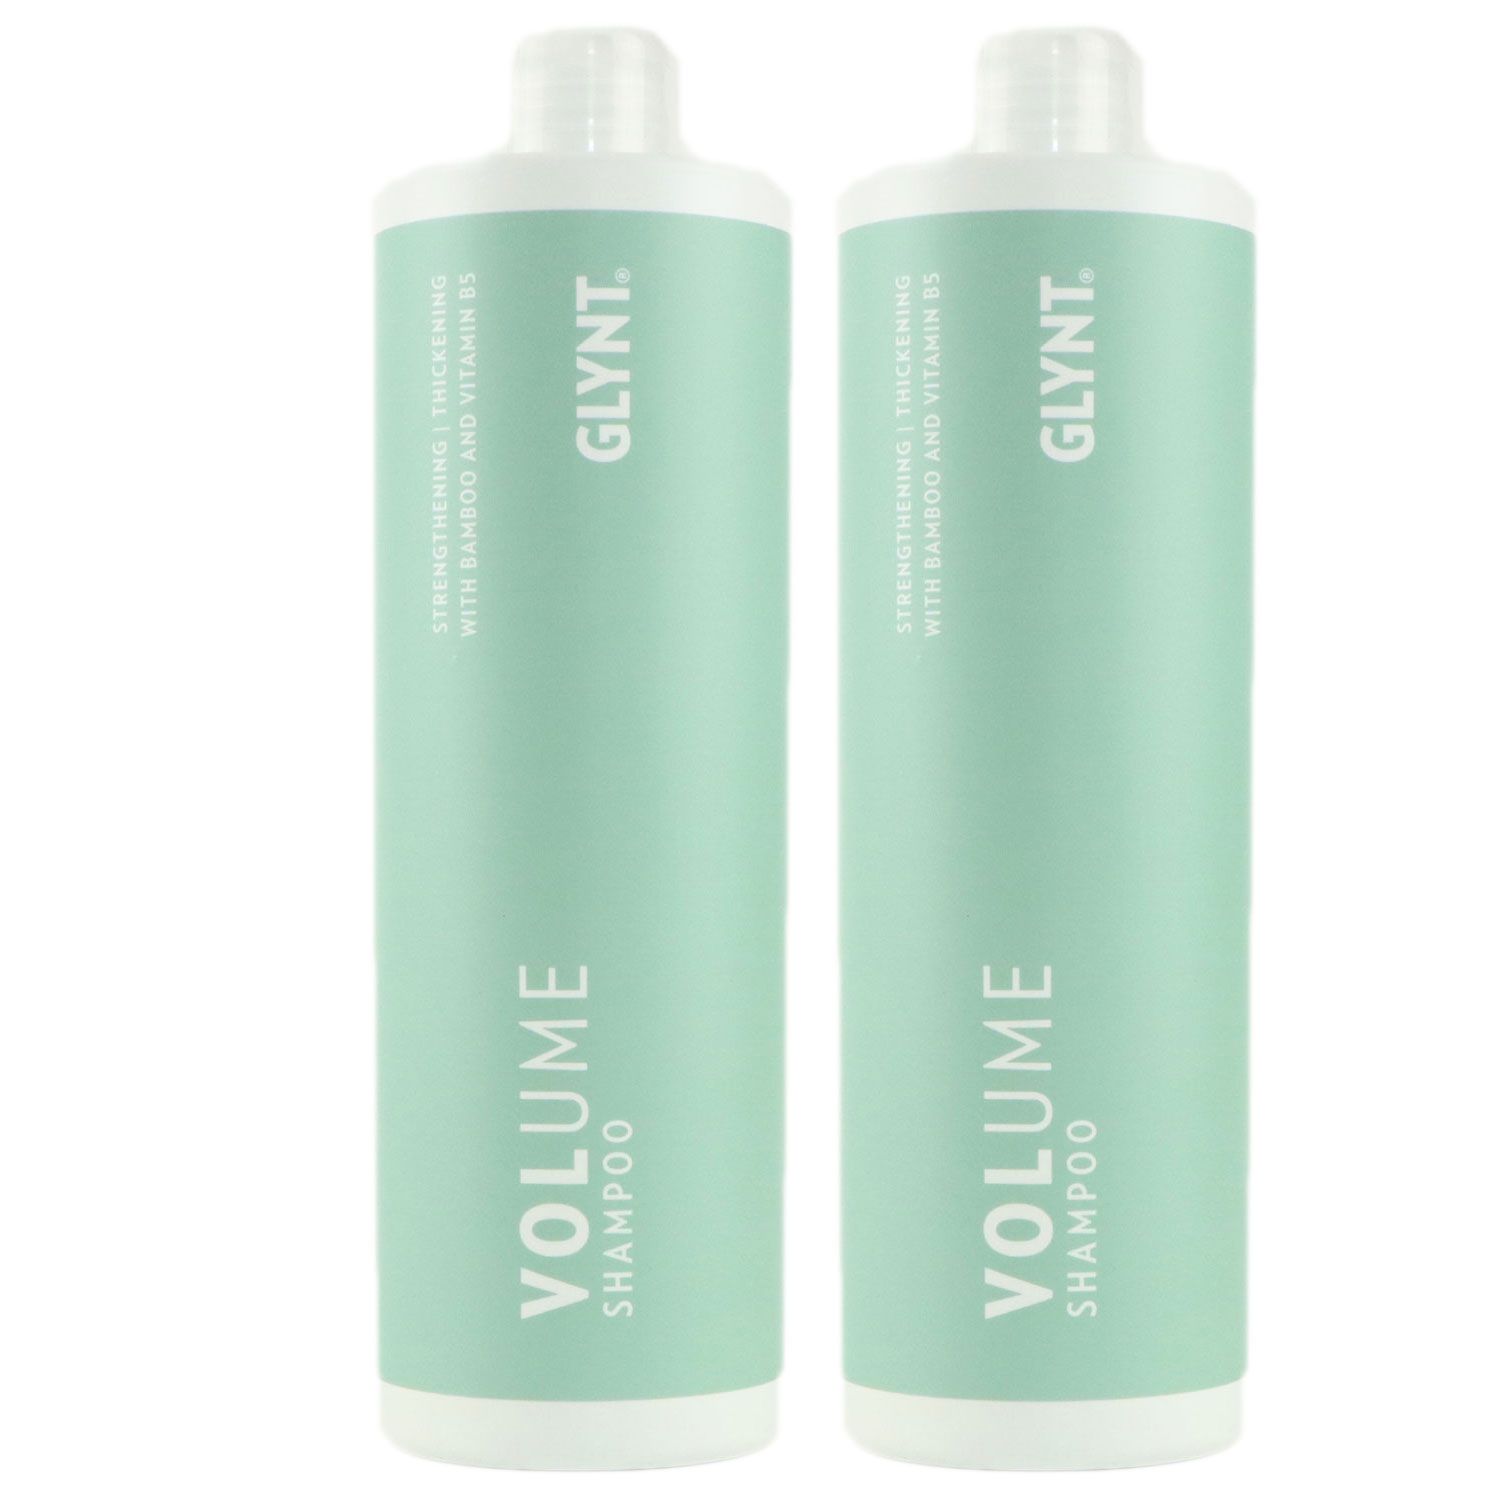 GLYNT Volume Energy Shampoo 2 x 1000 ml Haarshampoo Set bei